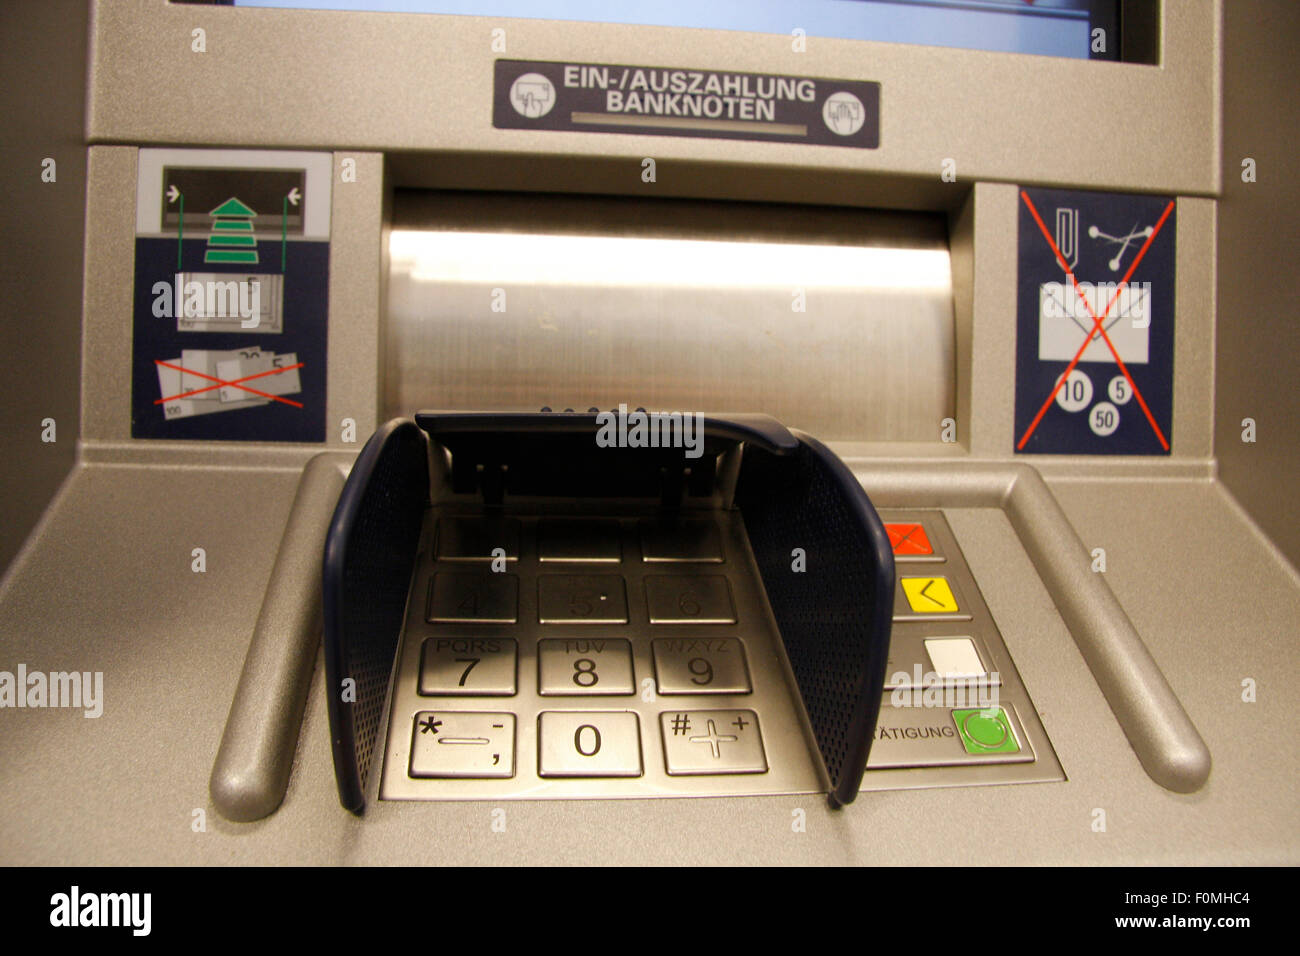 APRUIL 2008 - BERLINO: un Bancomat (ATM) in una banca di Berlino. Foto Stock